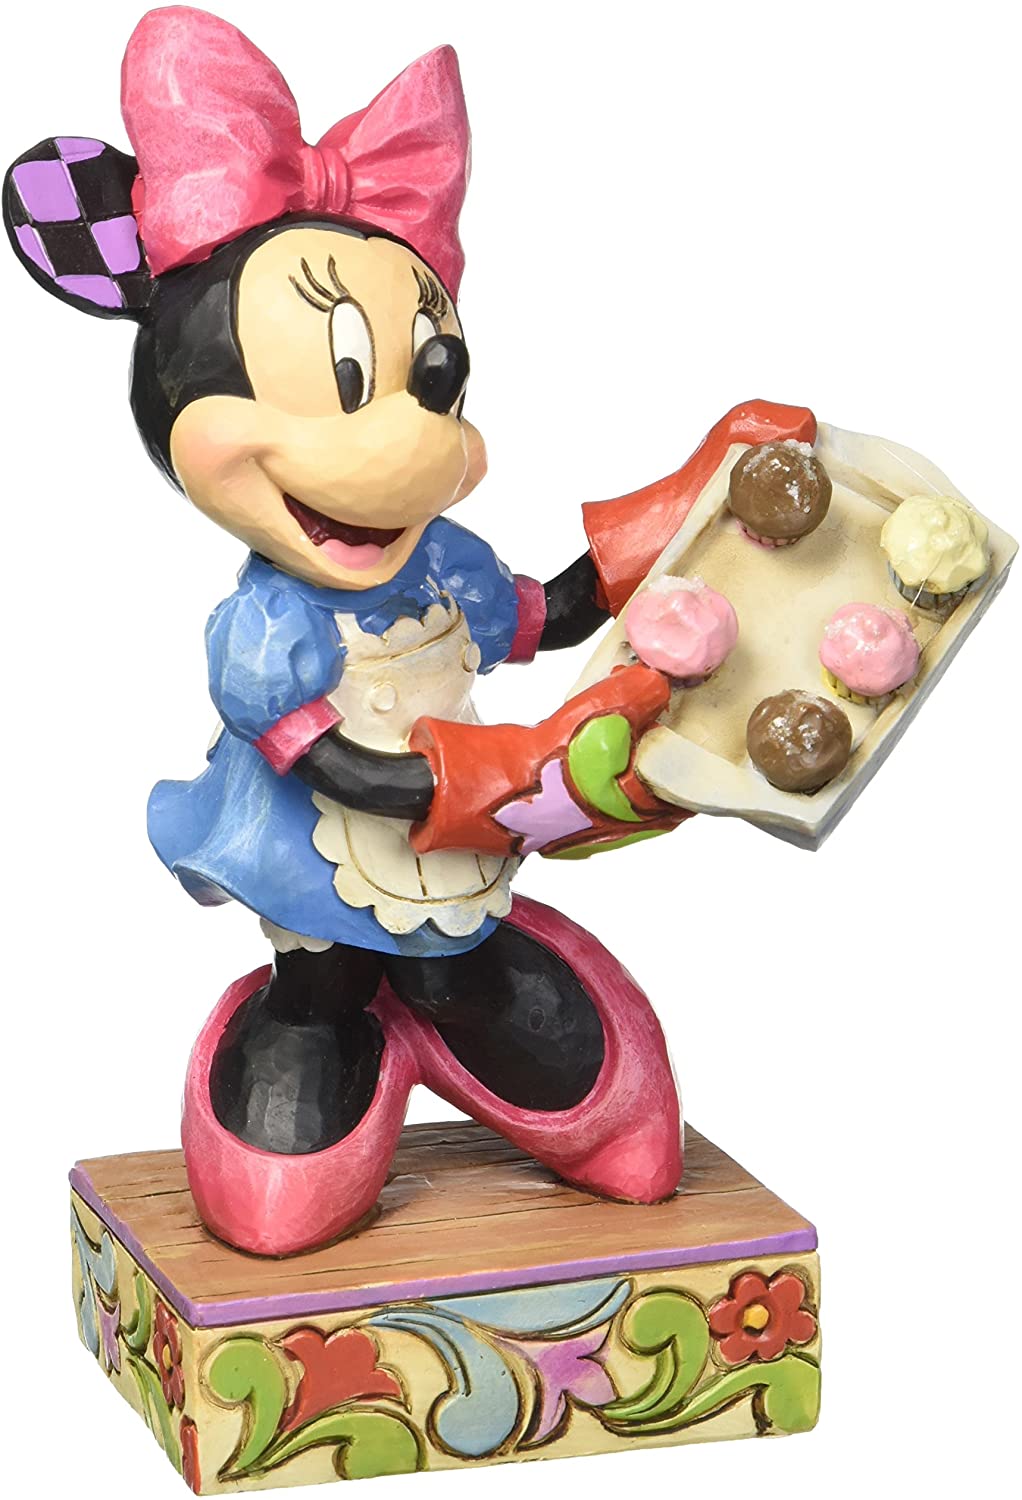 Enesco Jim Shore Disney Traditions Minnie Mouse Baker Collection Figure